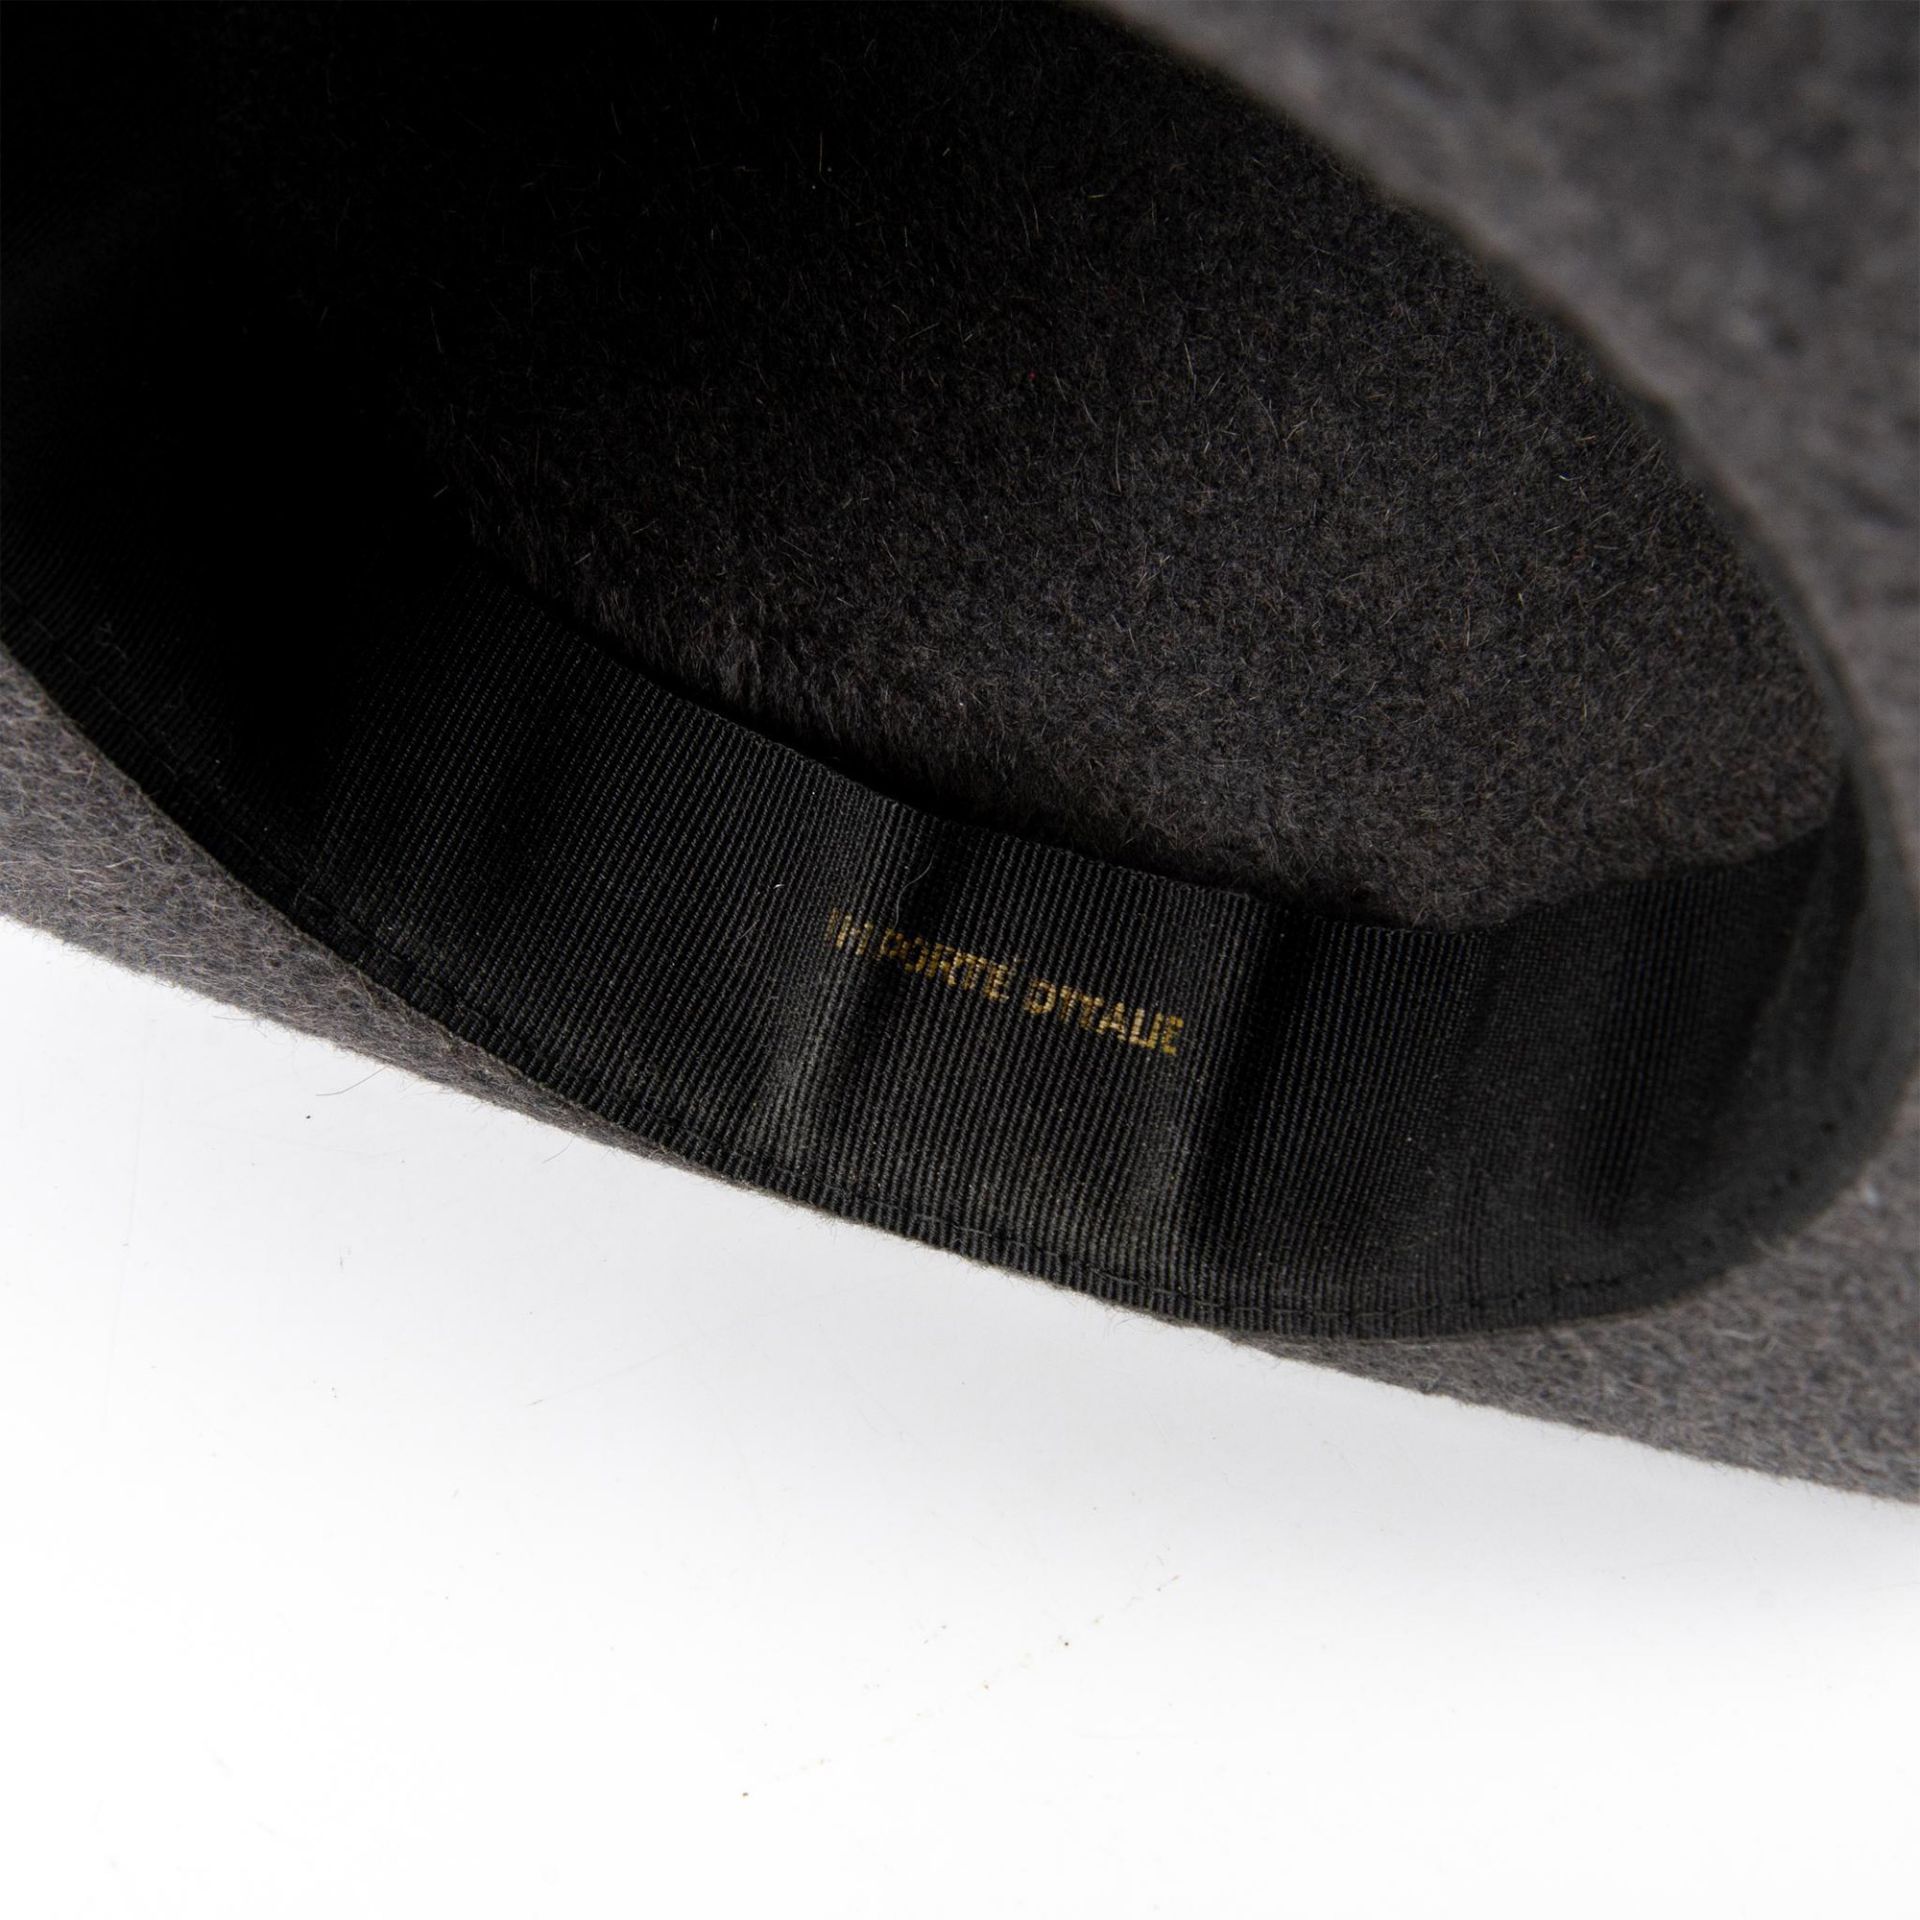 Chapeaux MOTSCH for Hermes, Paris, Merano Wool Grey Hat - Image 8 of 8